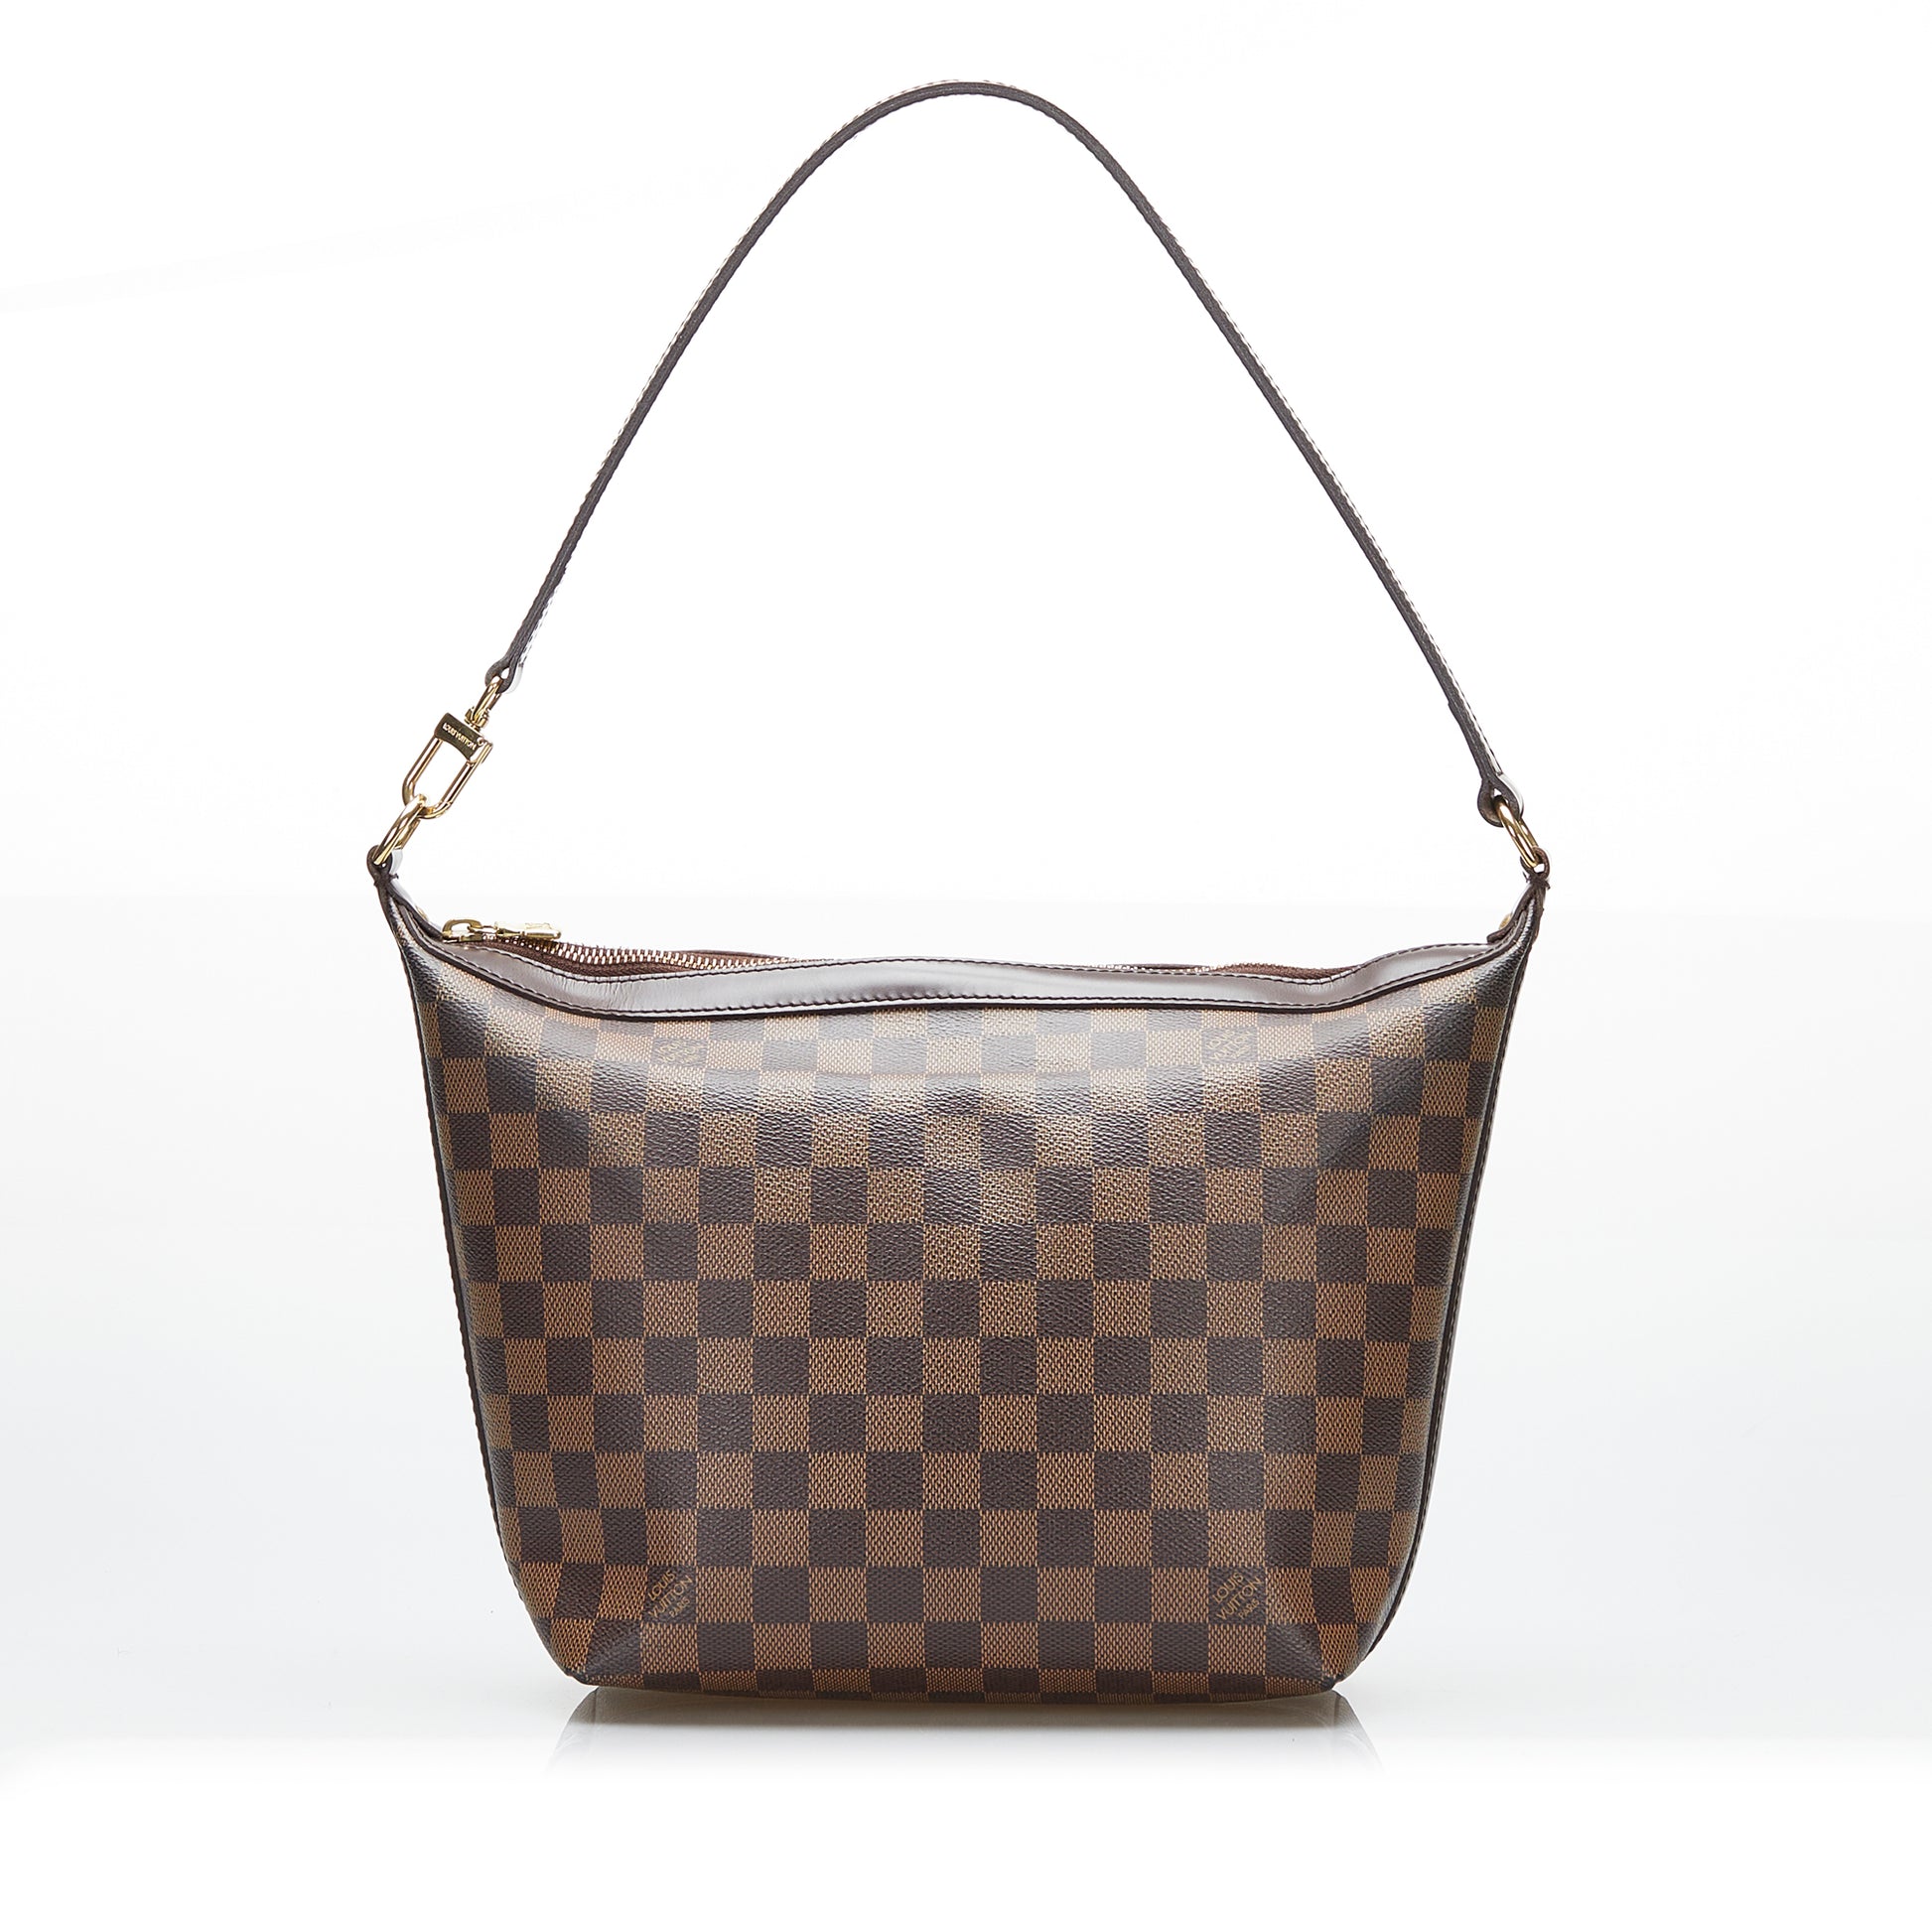 Vintage Louis Vuitton Illovo Damier Ebene mm Shoulder Bag